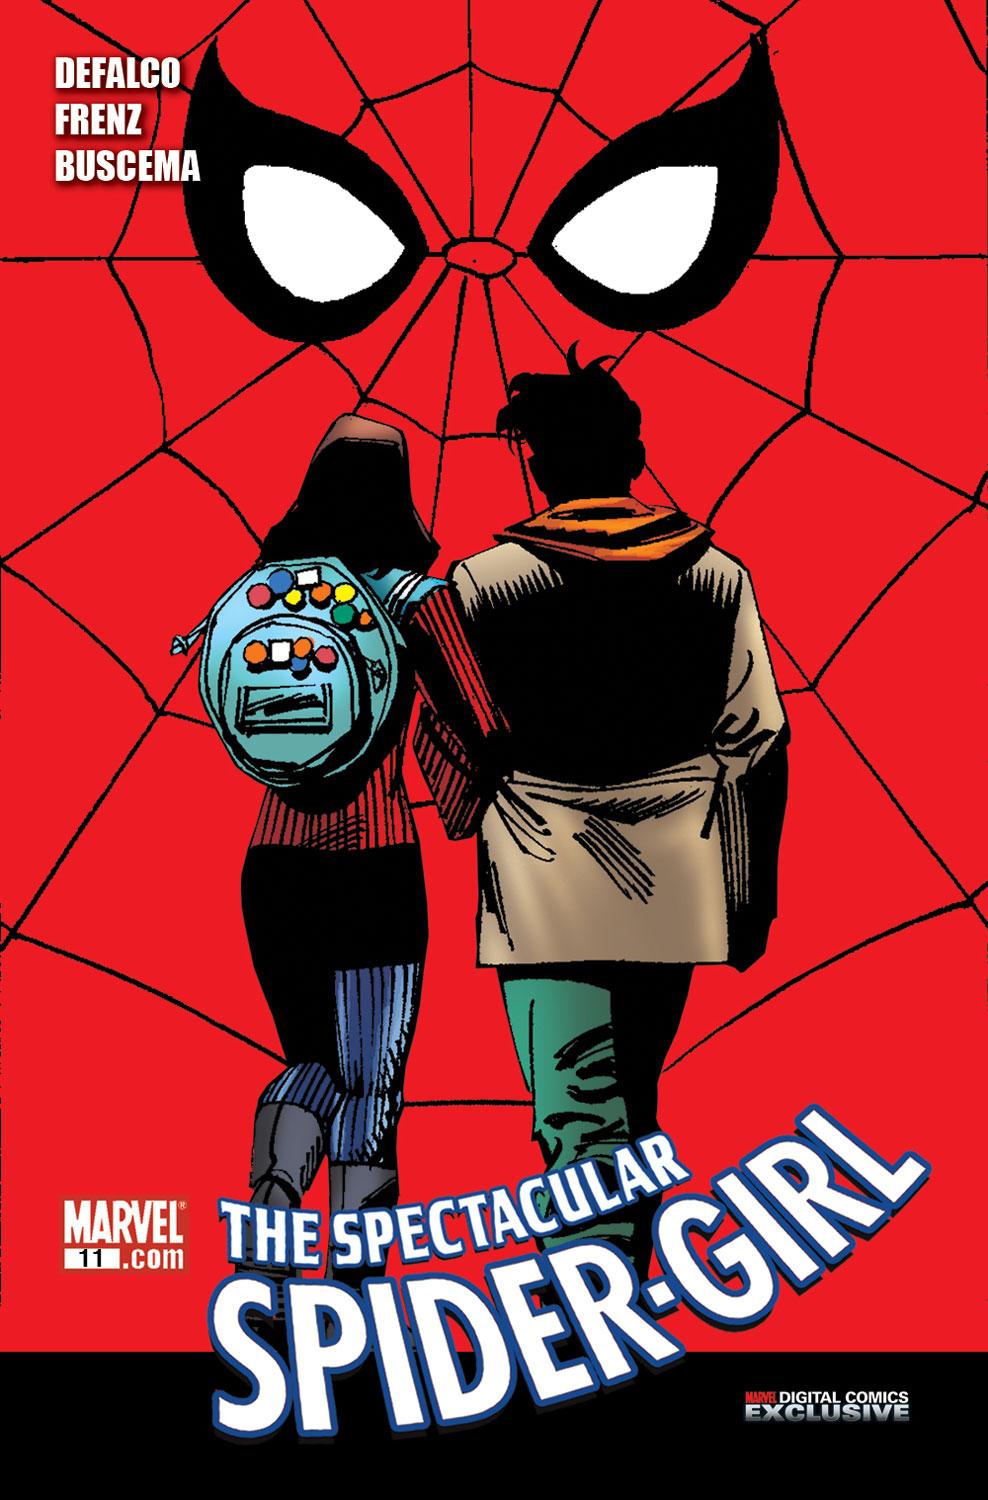 Spectacular Spider-Girl Digital Comic (2009) #11